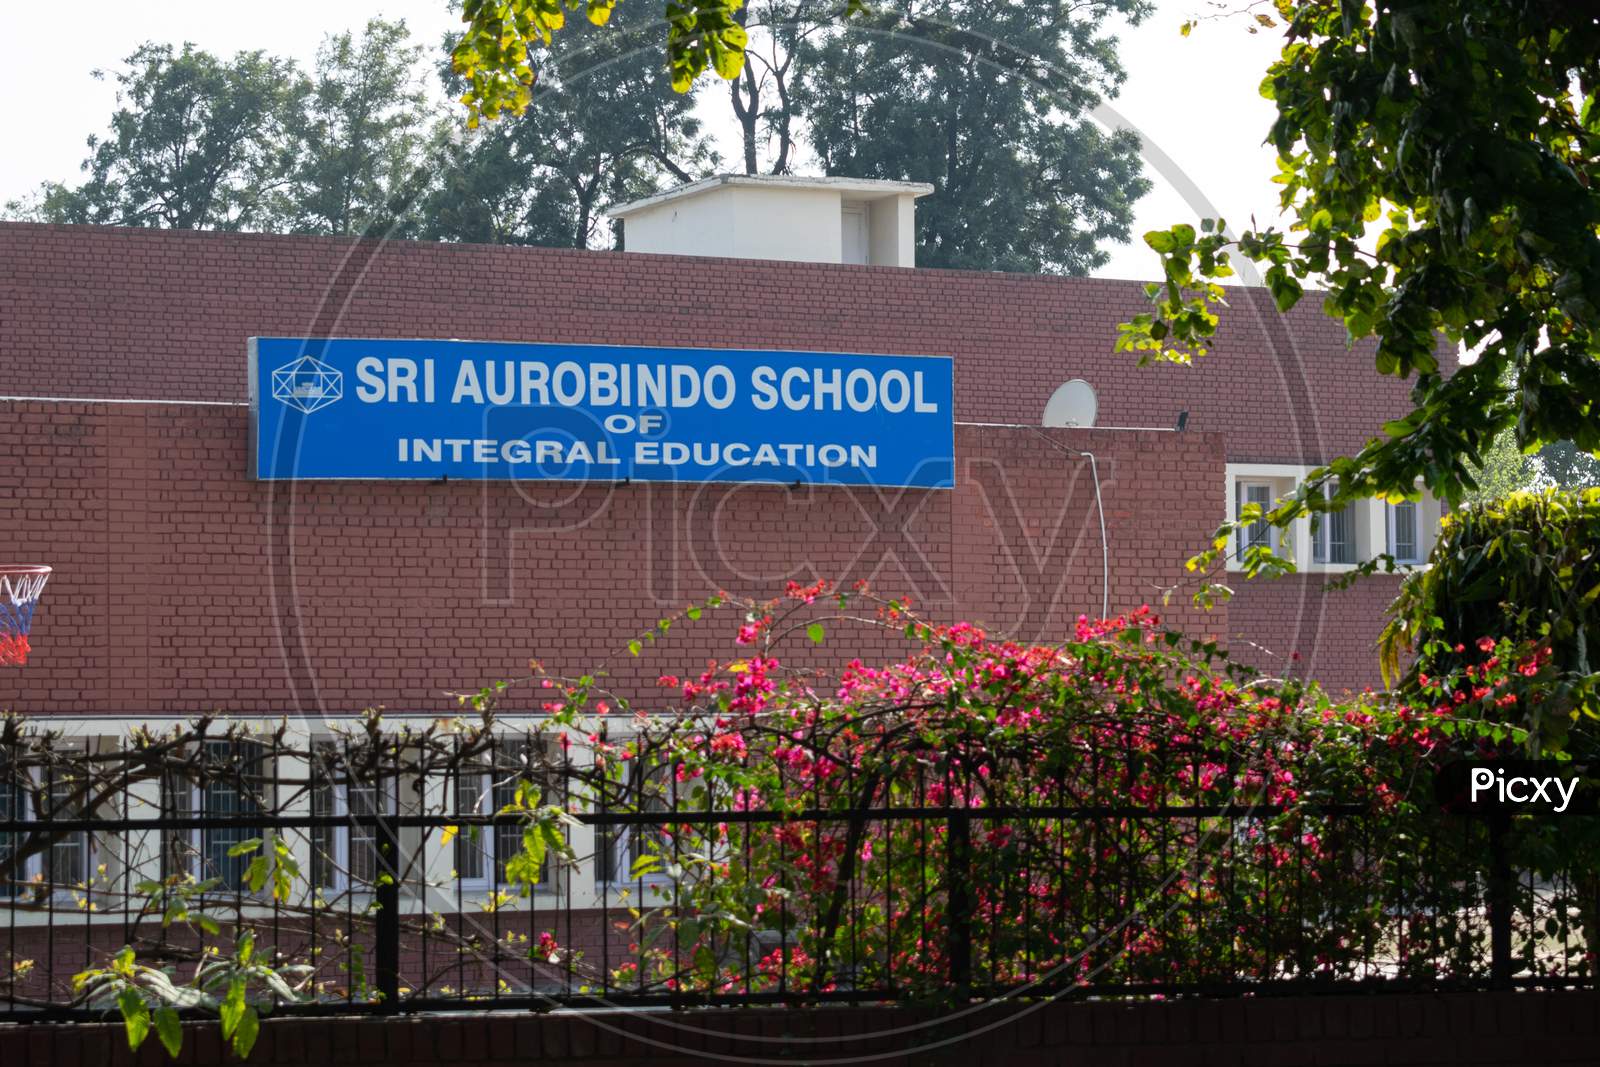 Sri Aurobindo School of Integral Education